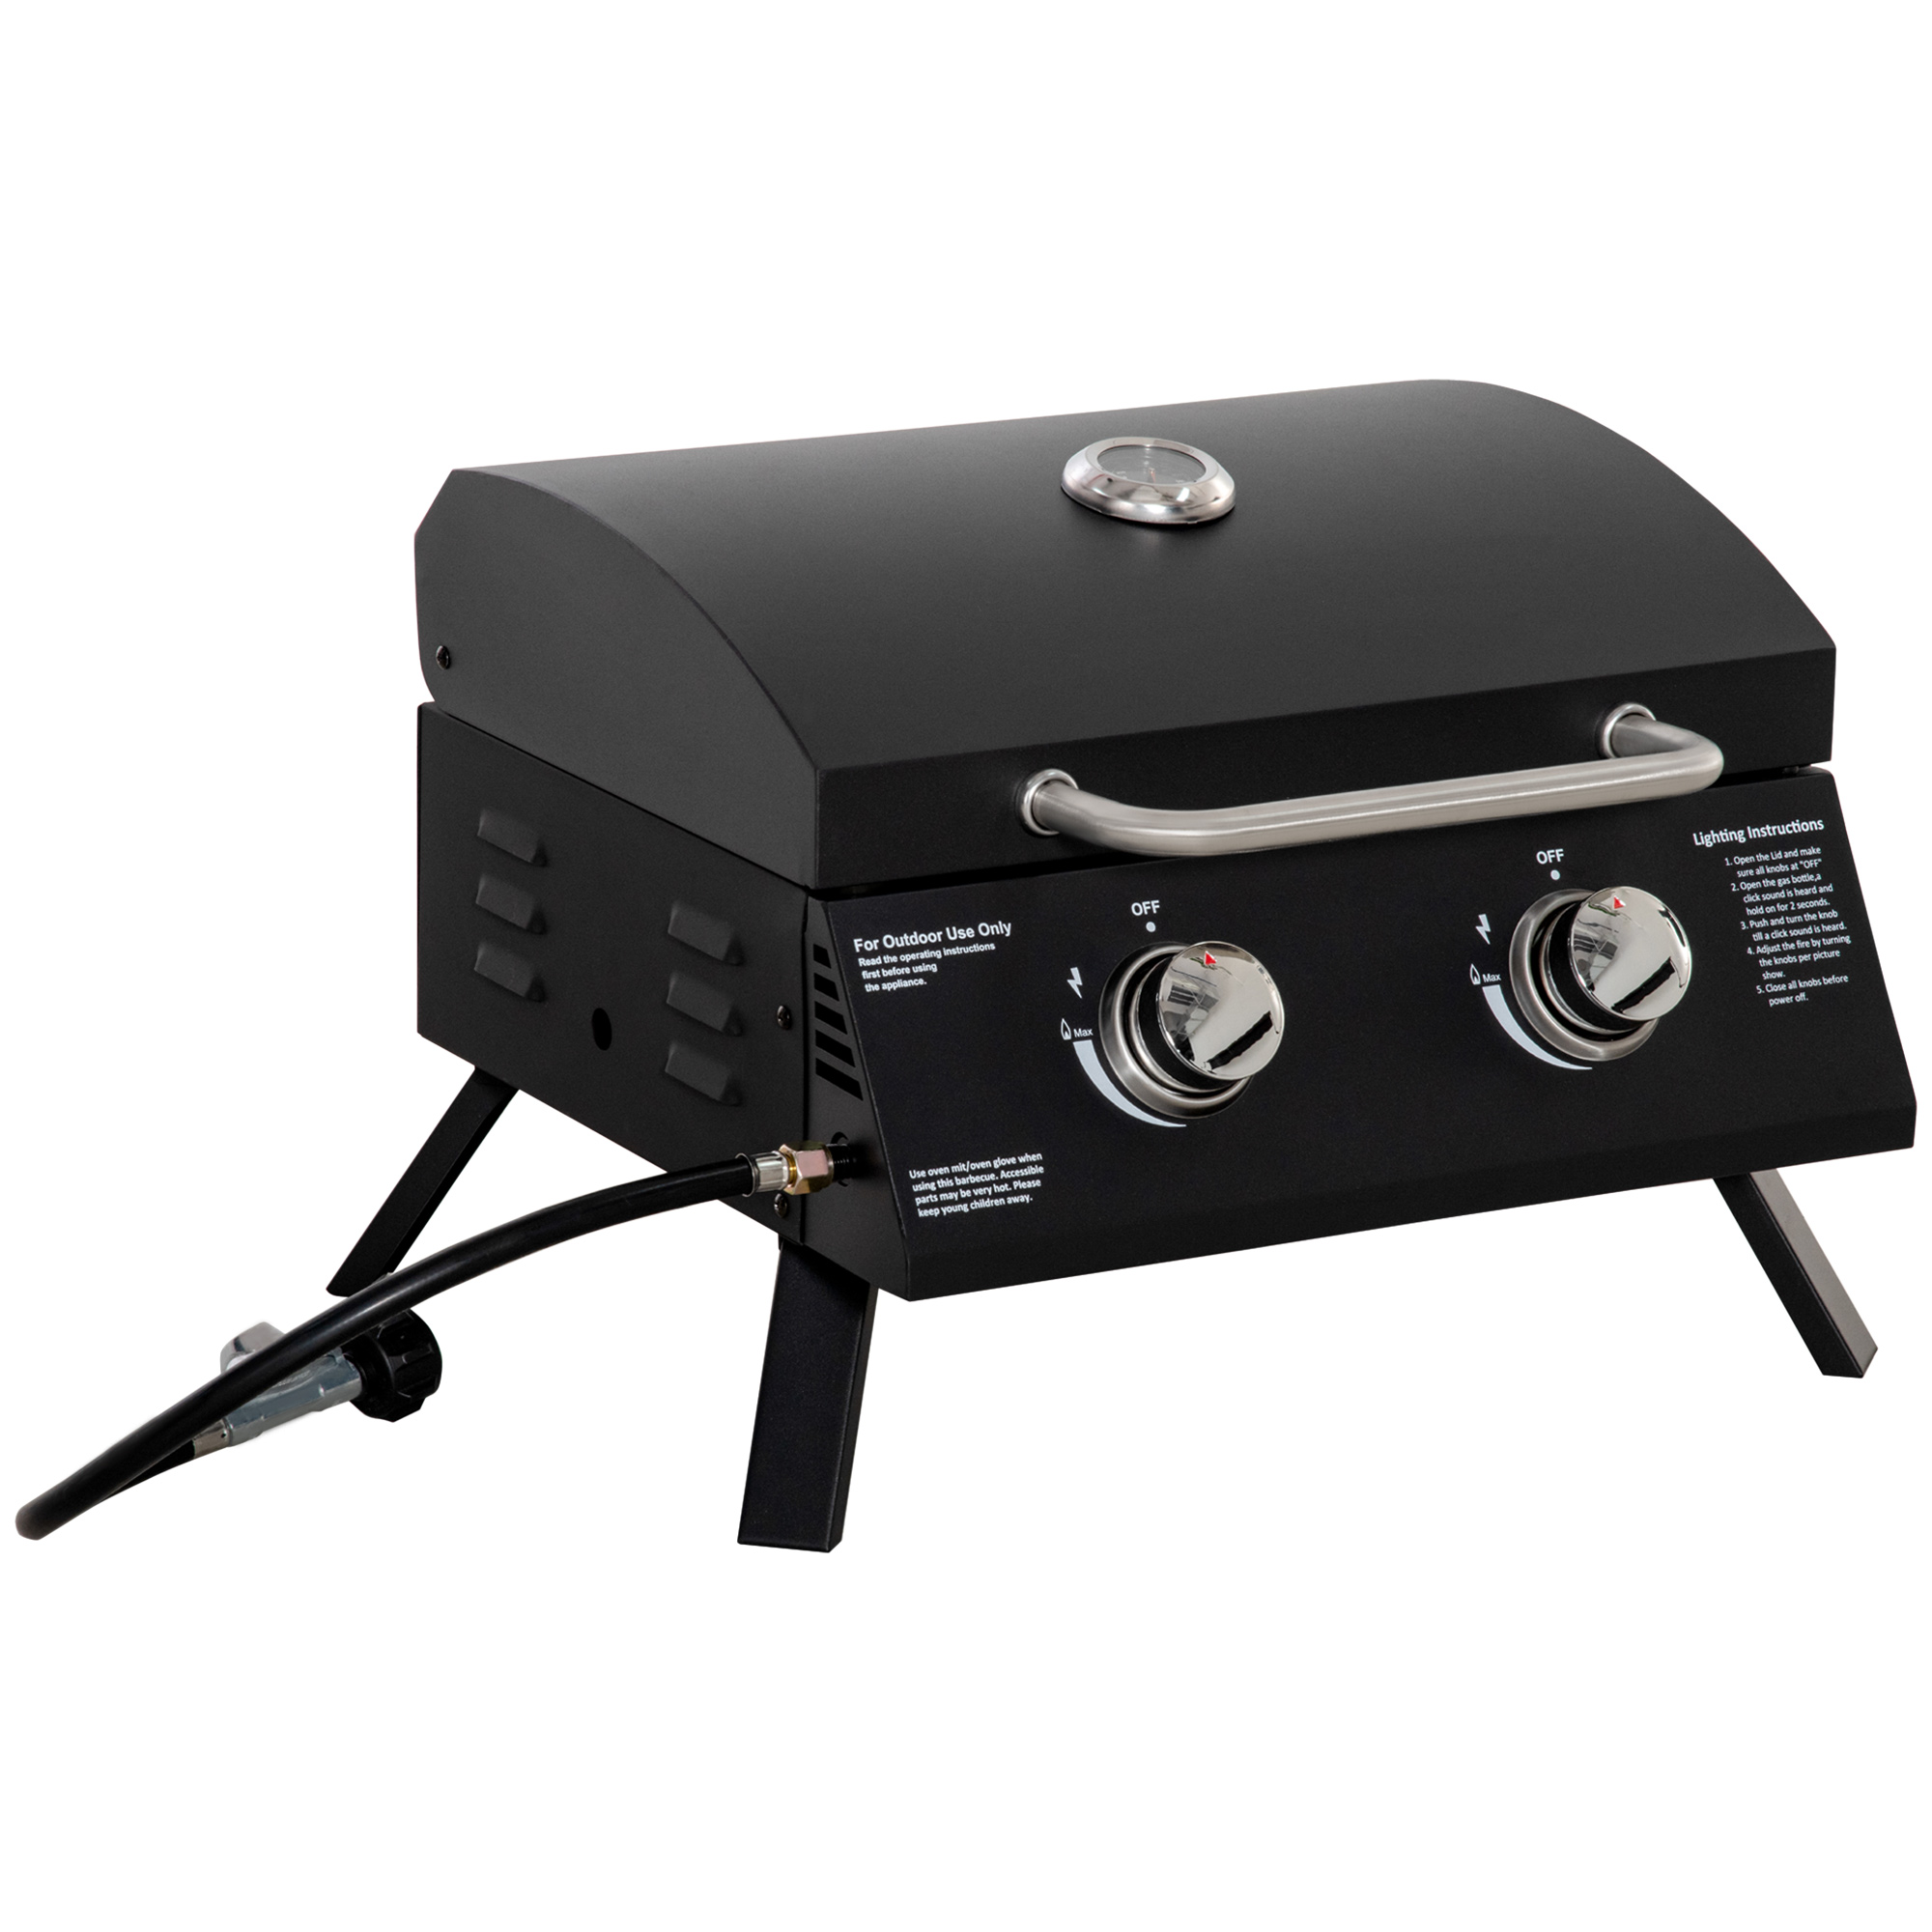 Weber - Barbecue au gaz propane portatif - Q 1200 - Rouge – BBQ